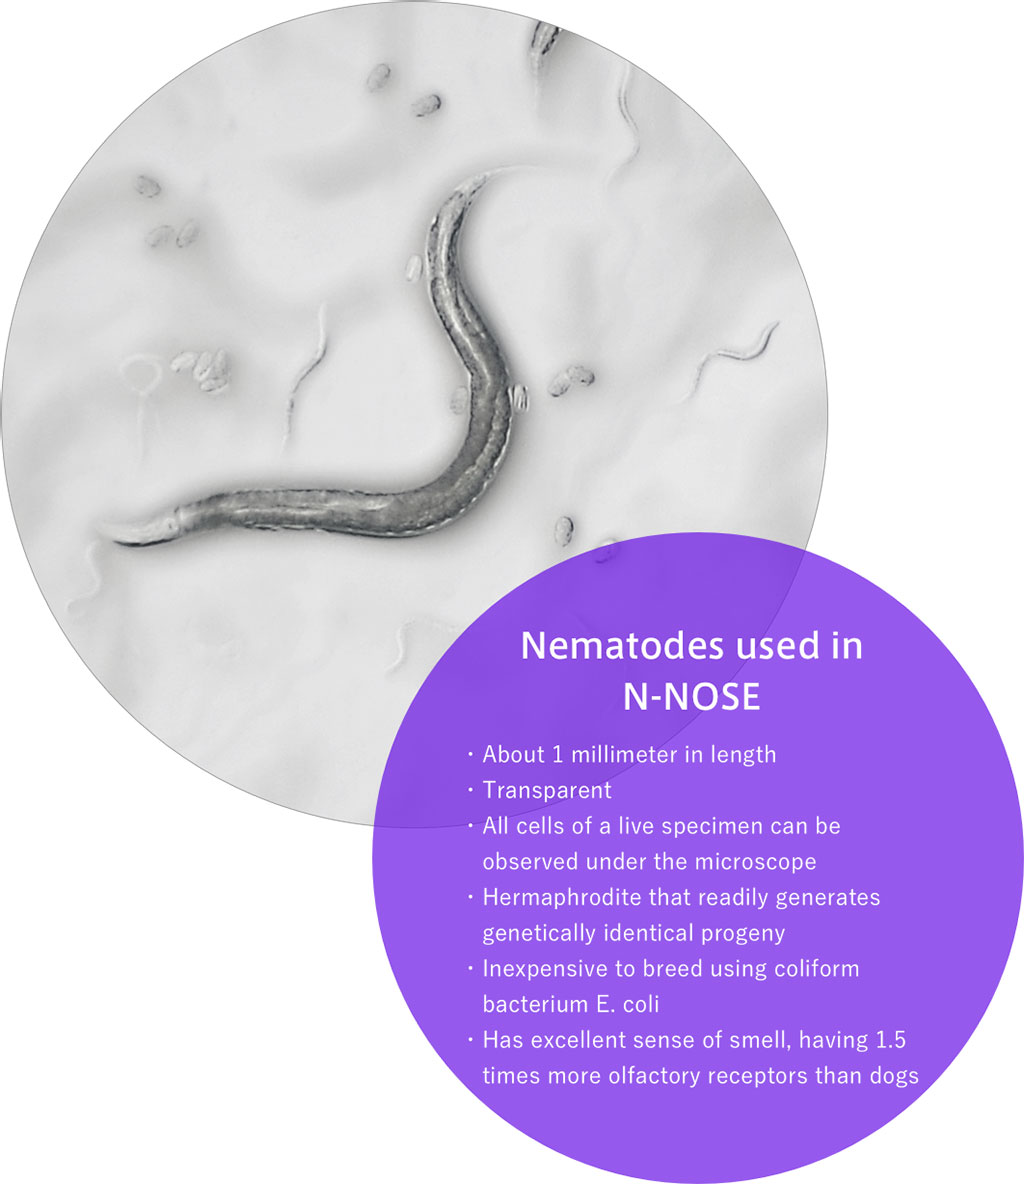 Image: Nematodes used in N-NOSE (Photo courtesy of Hirotsu Bio Science)